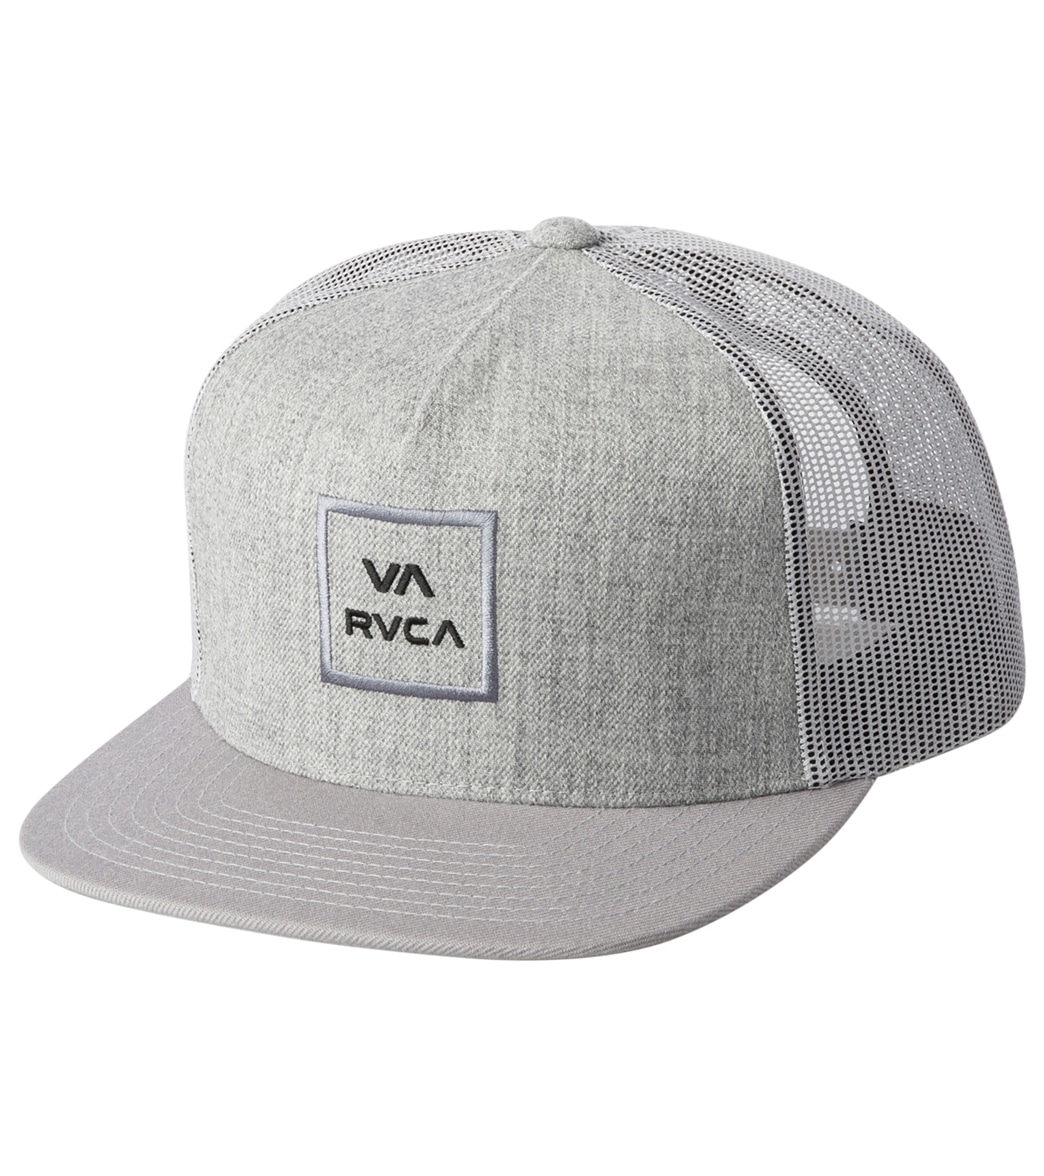 Rvca Men's Va Atw Trucker Hat - Heather Grey/Black One Size - Swimoutlet.com